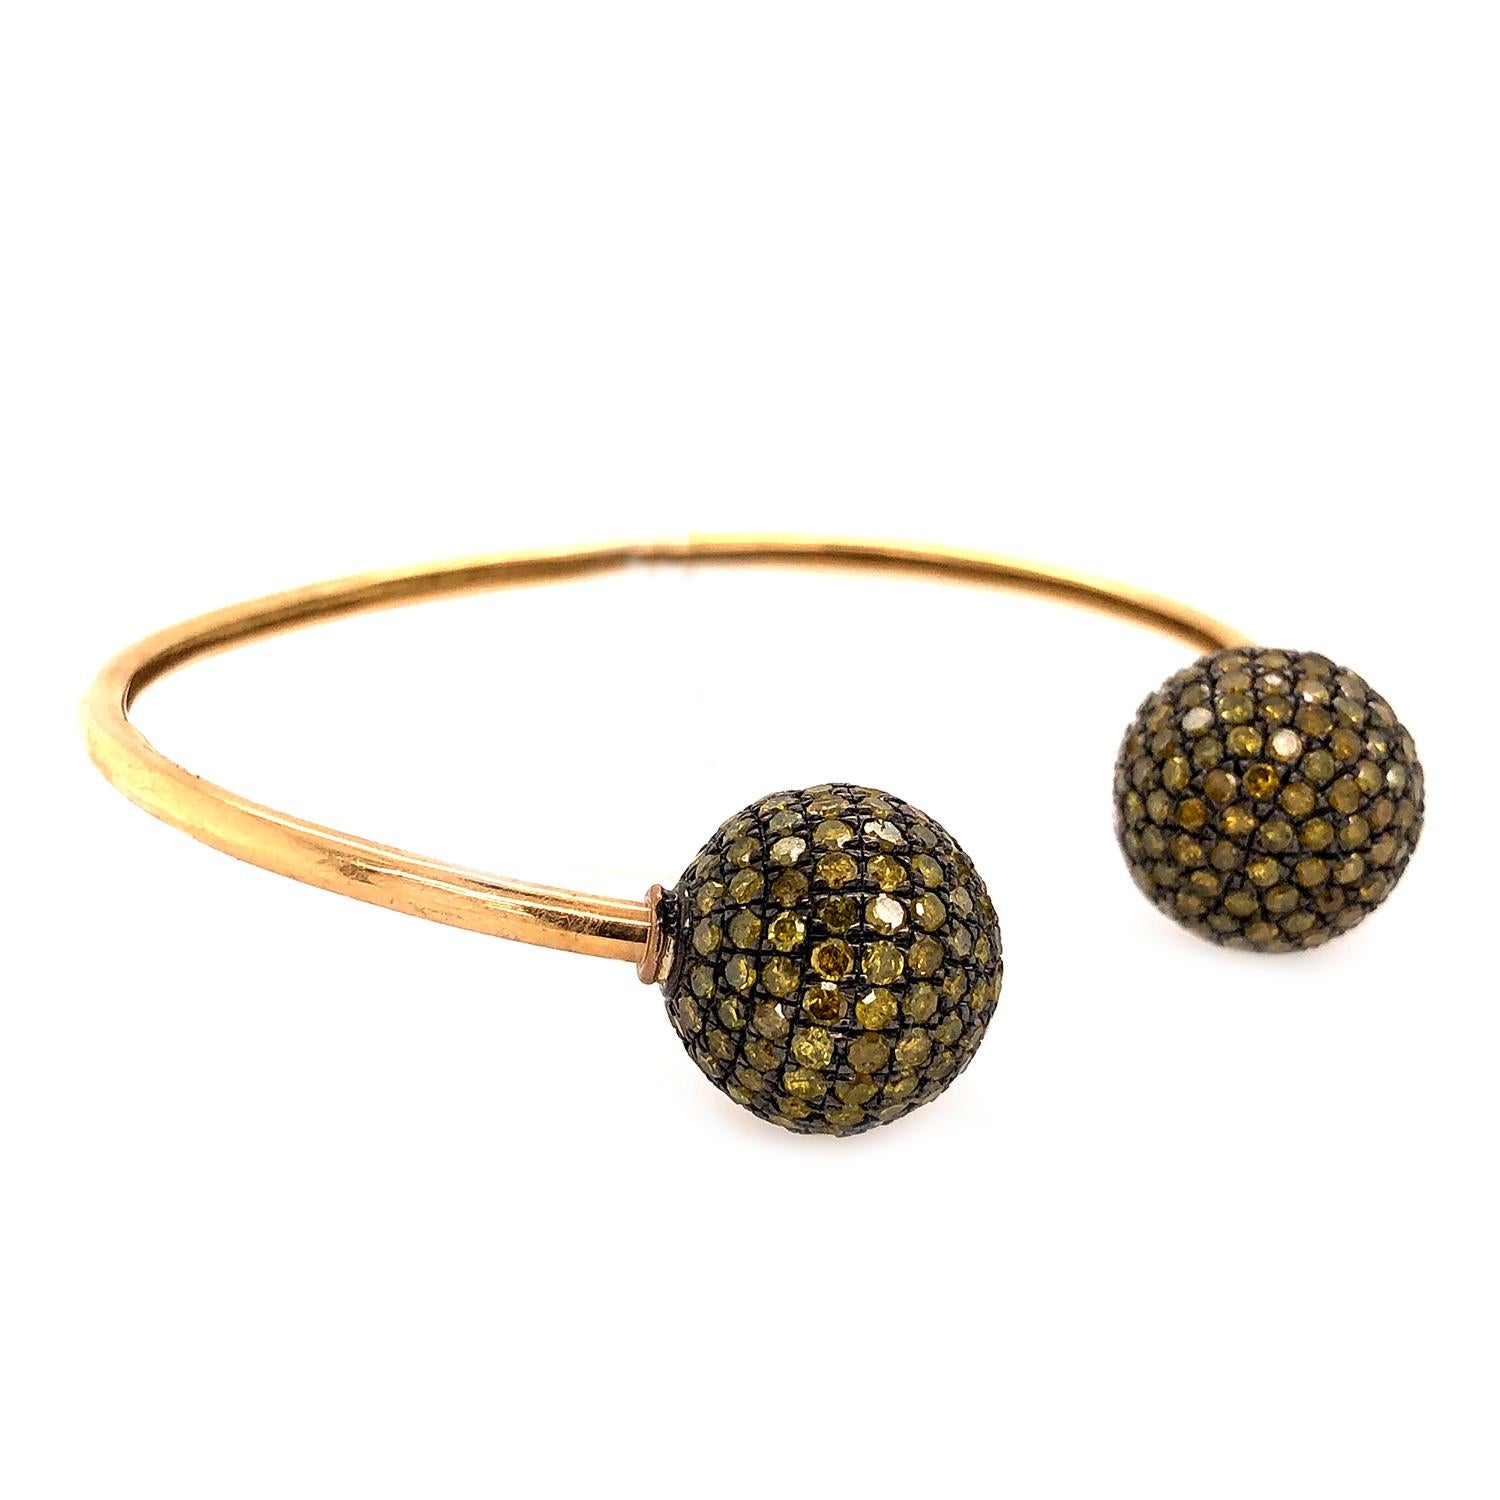 gold bracelet with balls on end